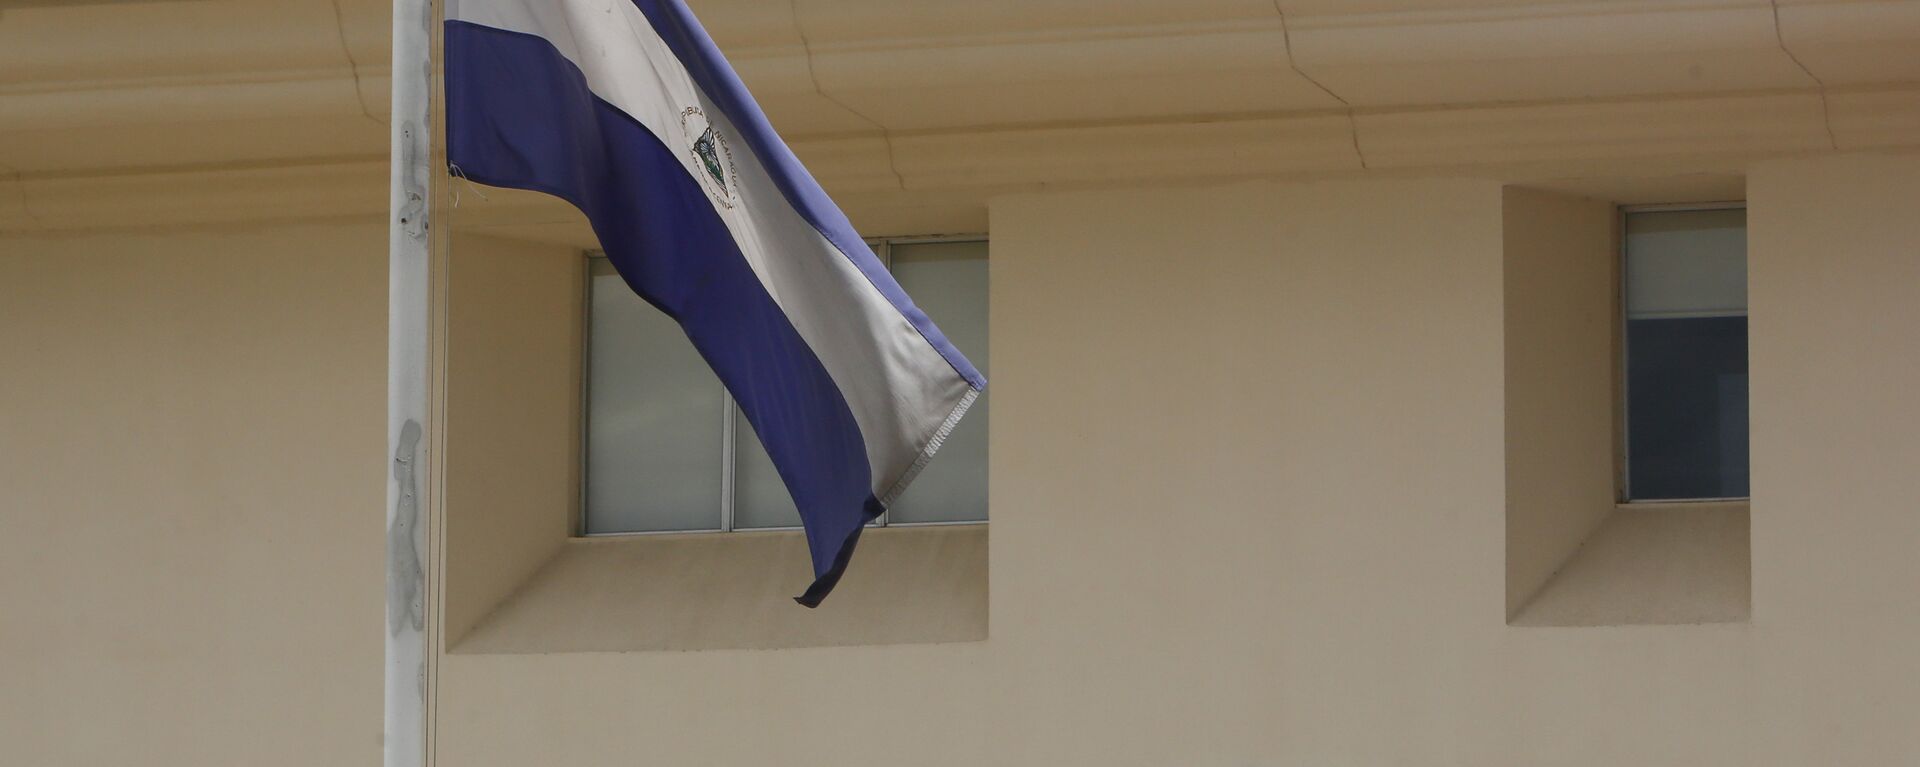 Bandera de Nicaragua - Sputnik Mundo, 1920, 22.06.2021